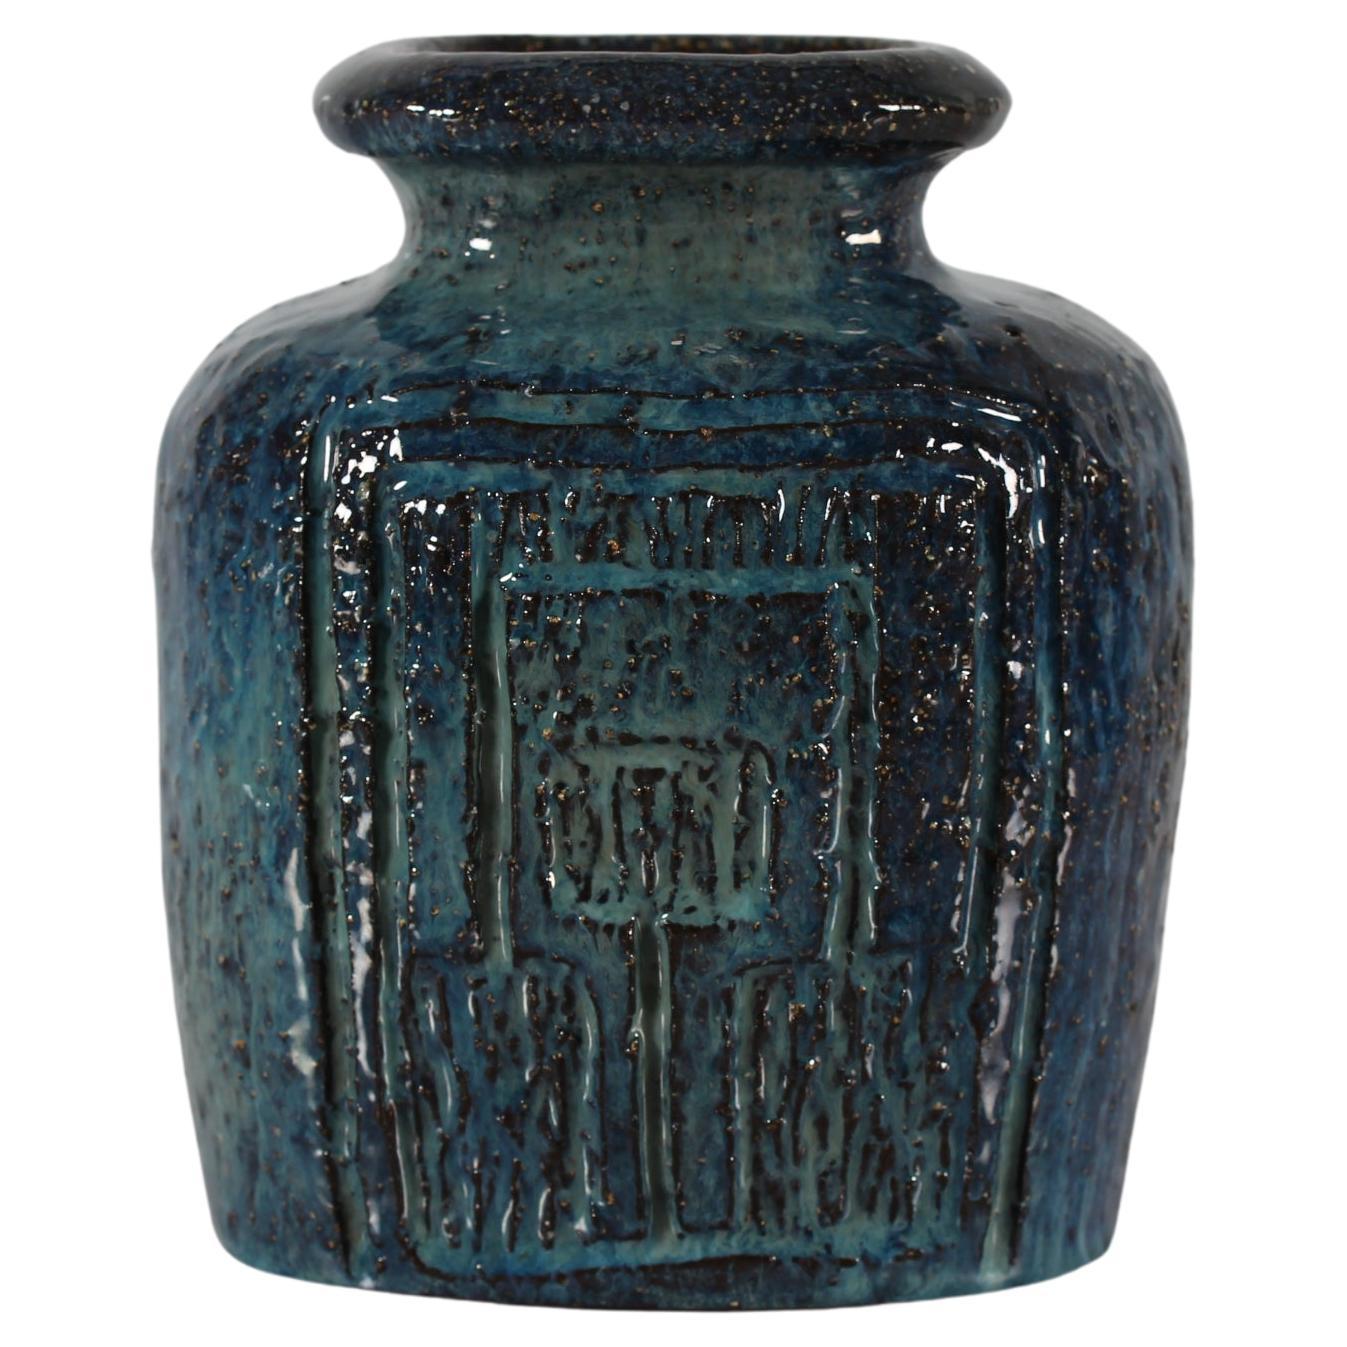 Artistic vase by Danish Sejer Ceramic Studio Pottery Brutalist Rustic Blue 1970s